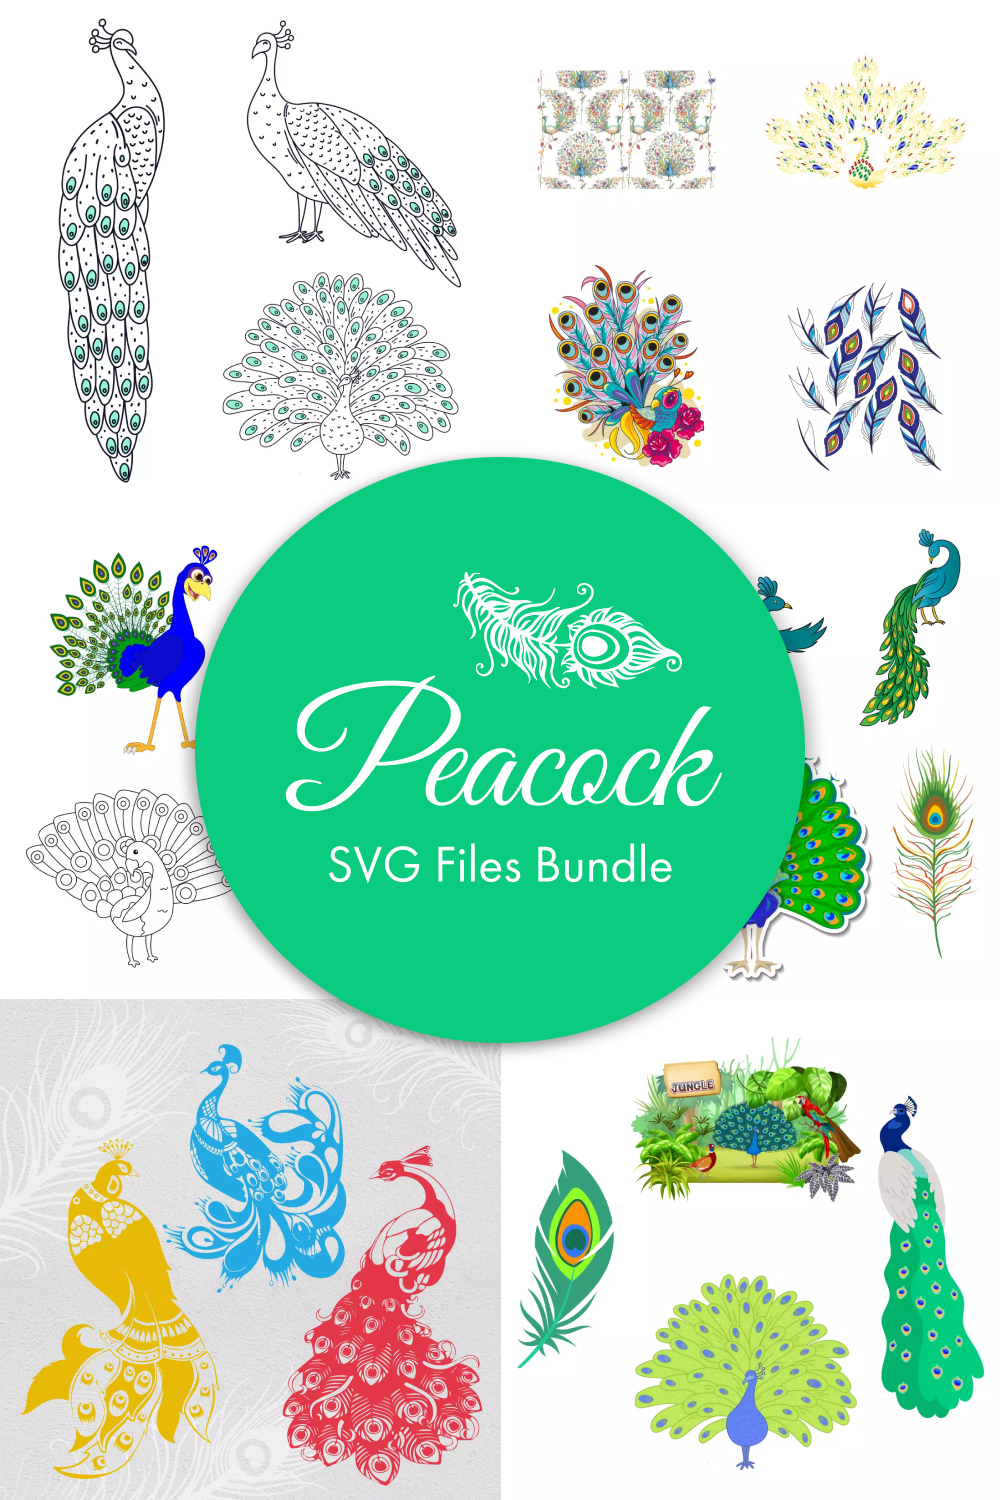 peacock svg files bundle pinterest 928